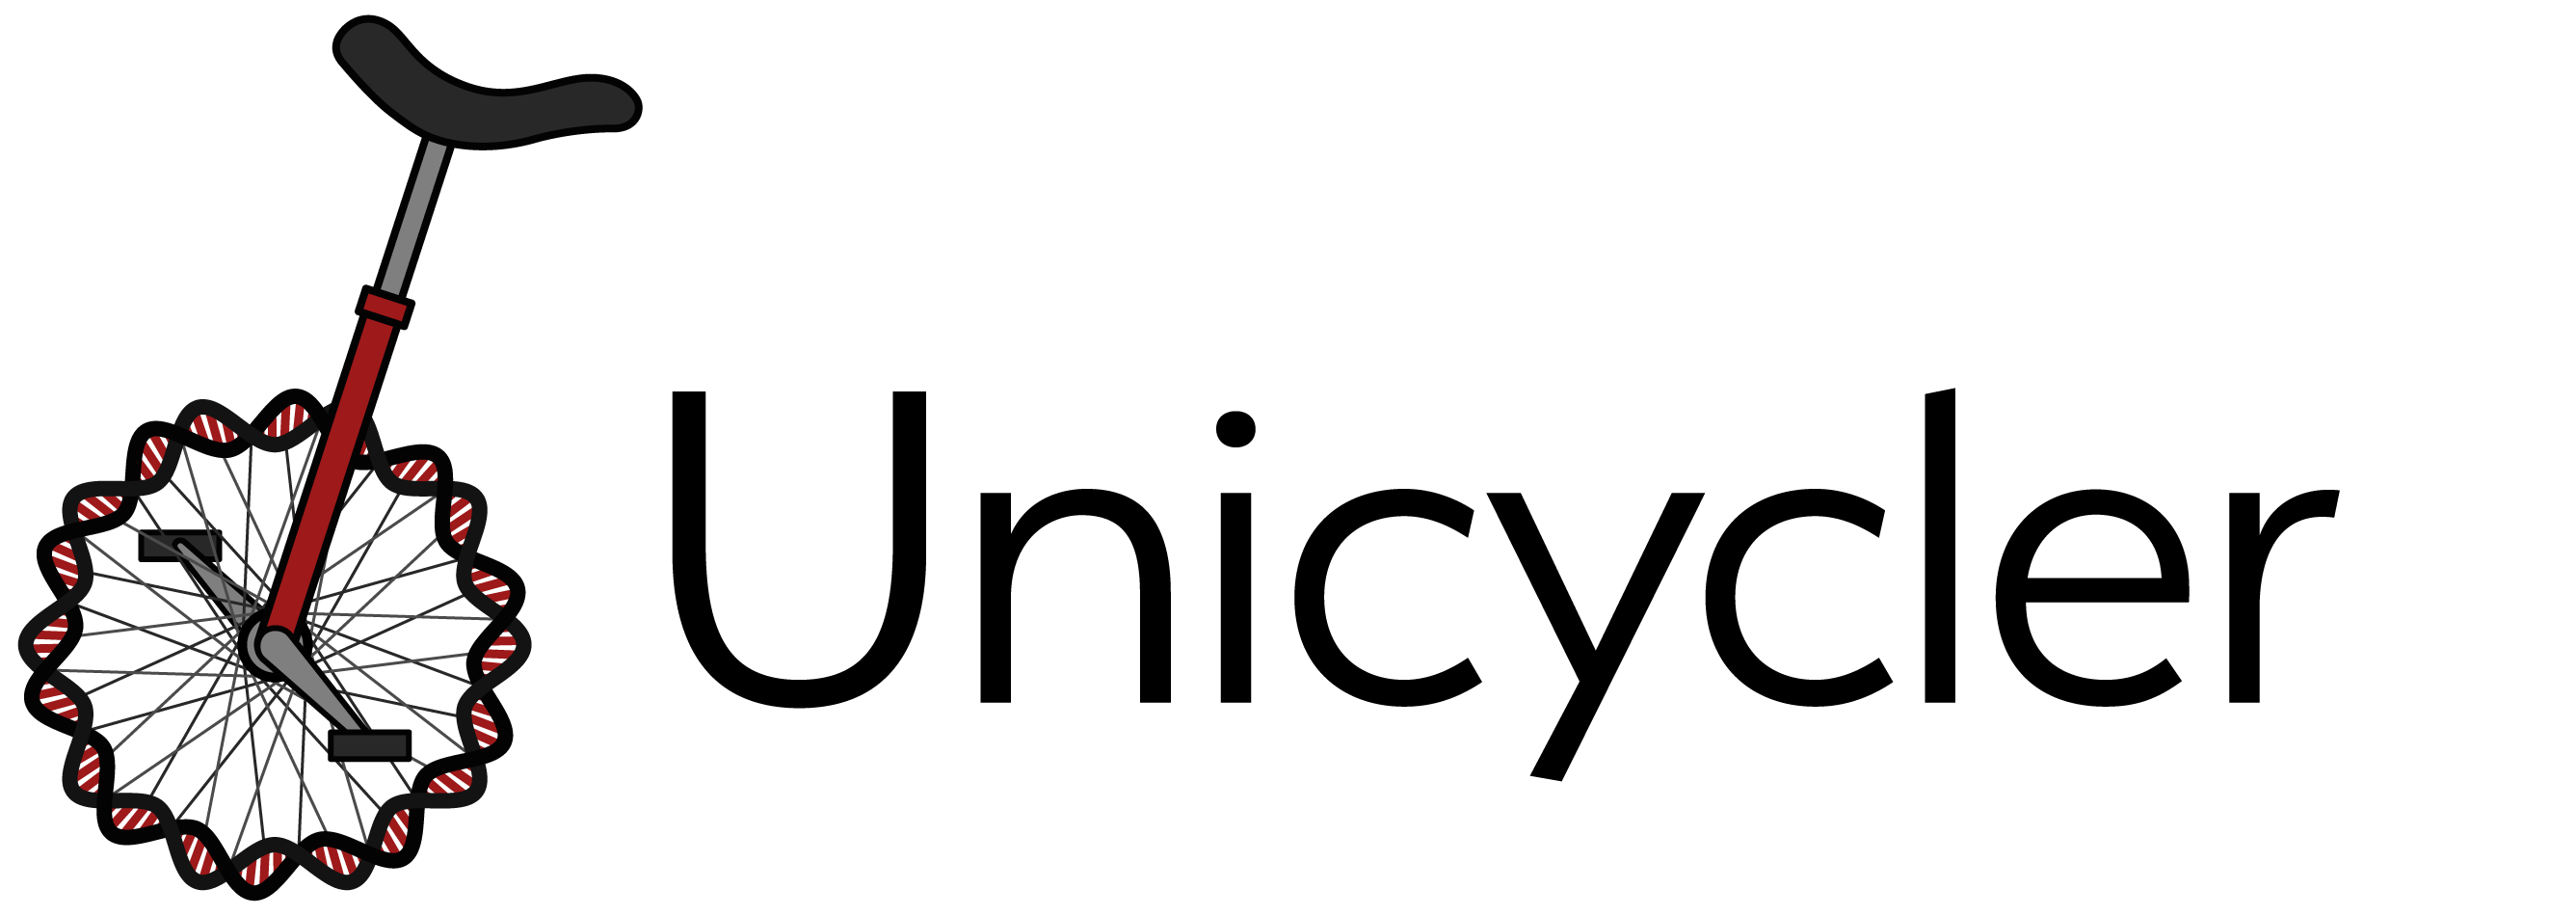 Unicycler